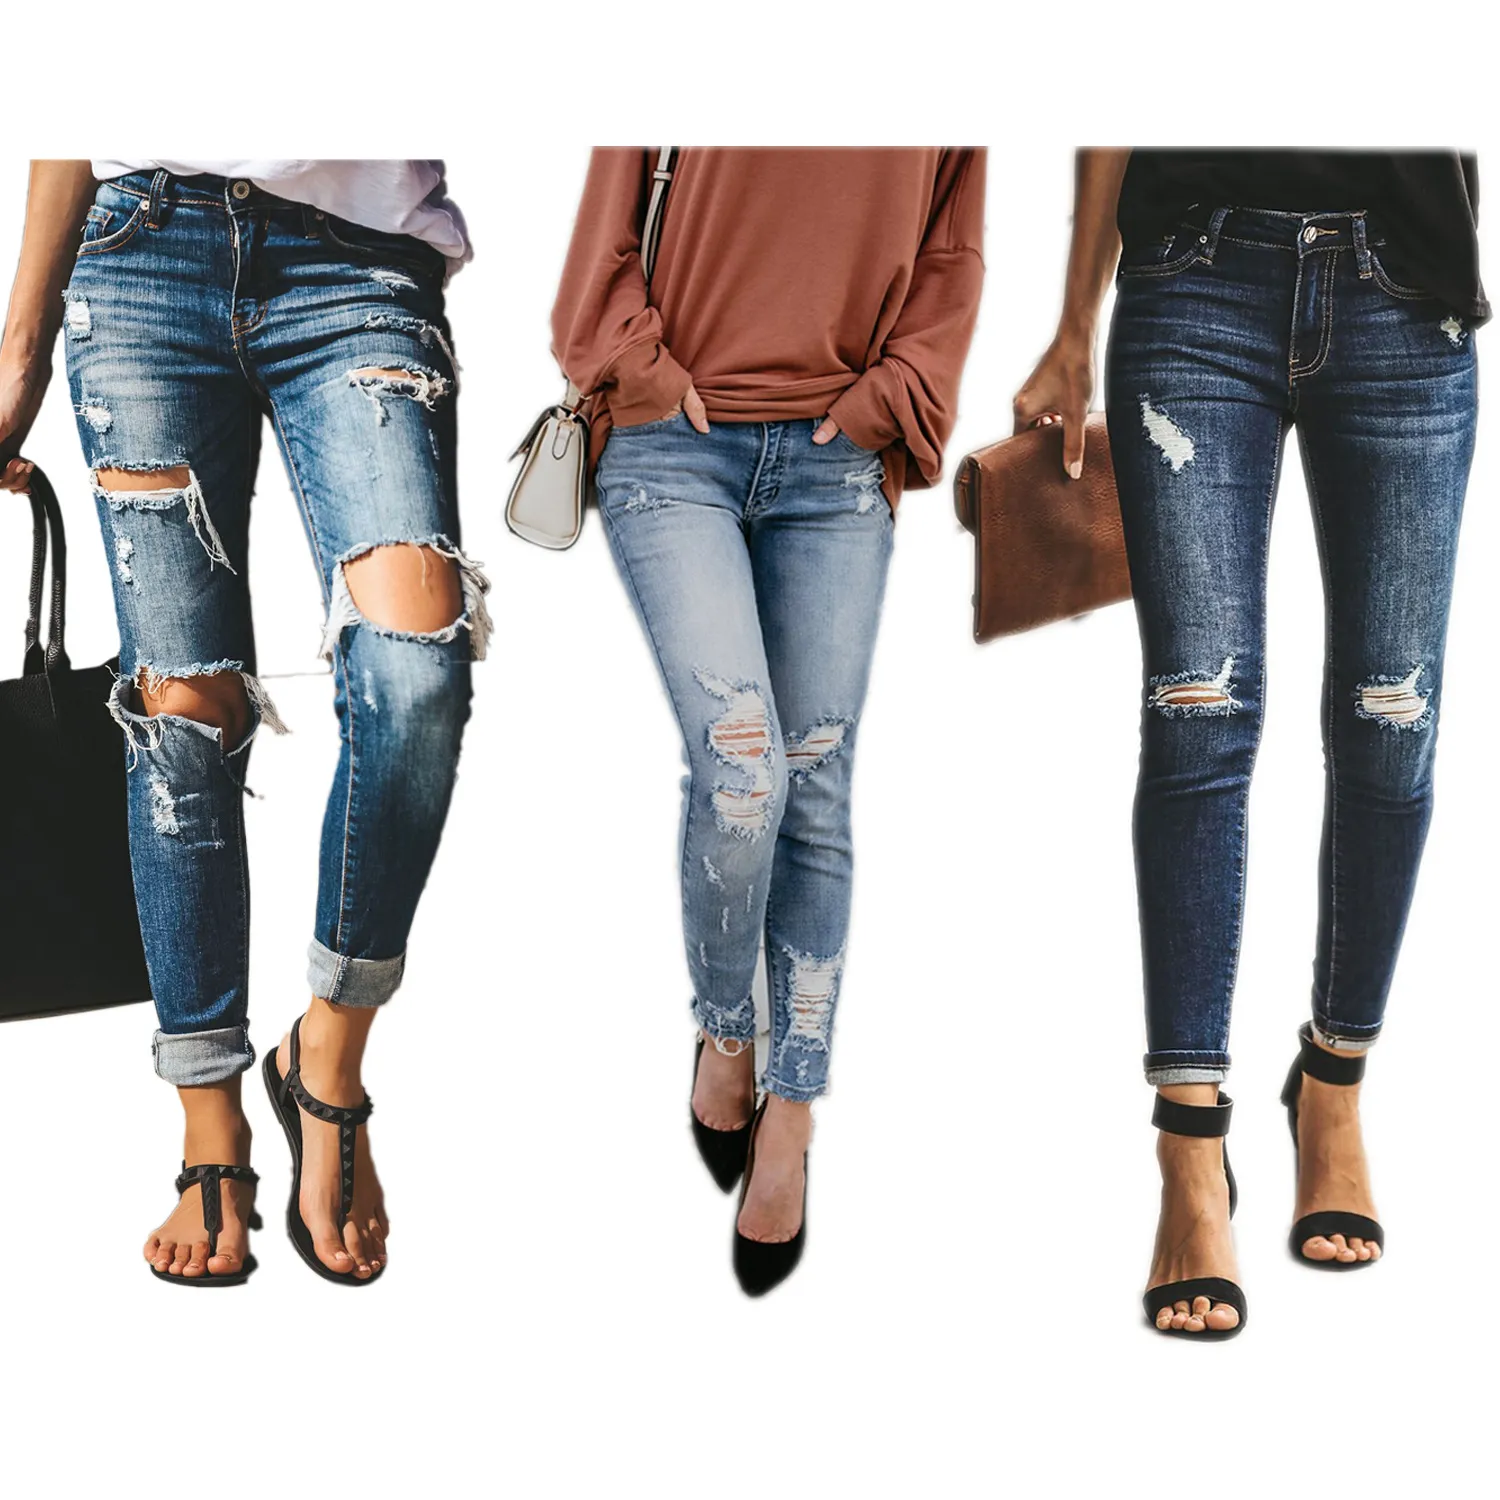 Merk vrouwen sexy potlood jeans ontwerper vrouwelijke streetwear casual vintage kleding slanke denim broek gescheurde holle skinny broek jeans xs hip blauwe vrouwelijke broek